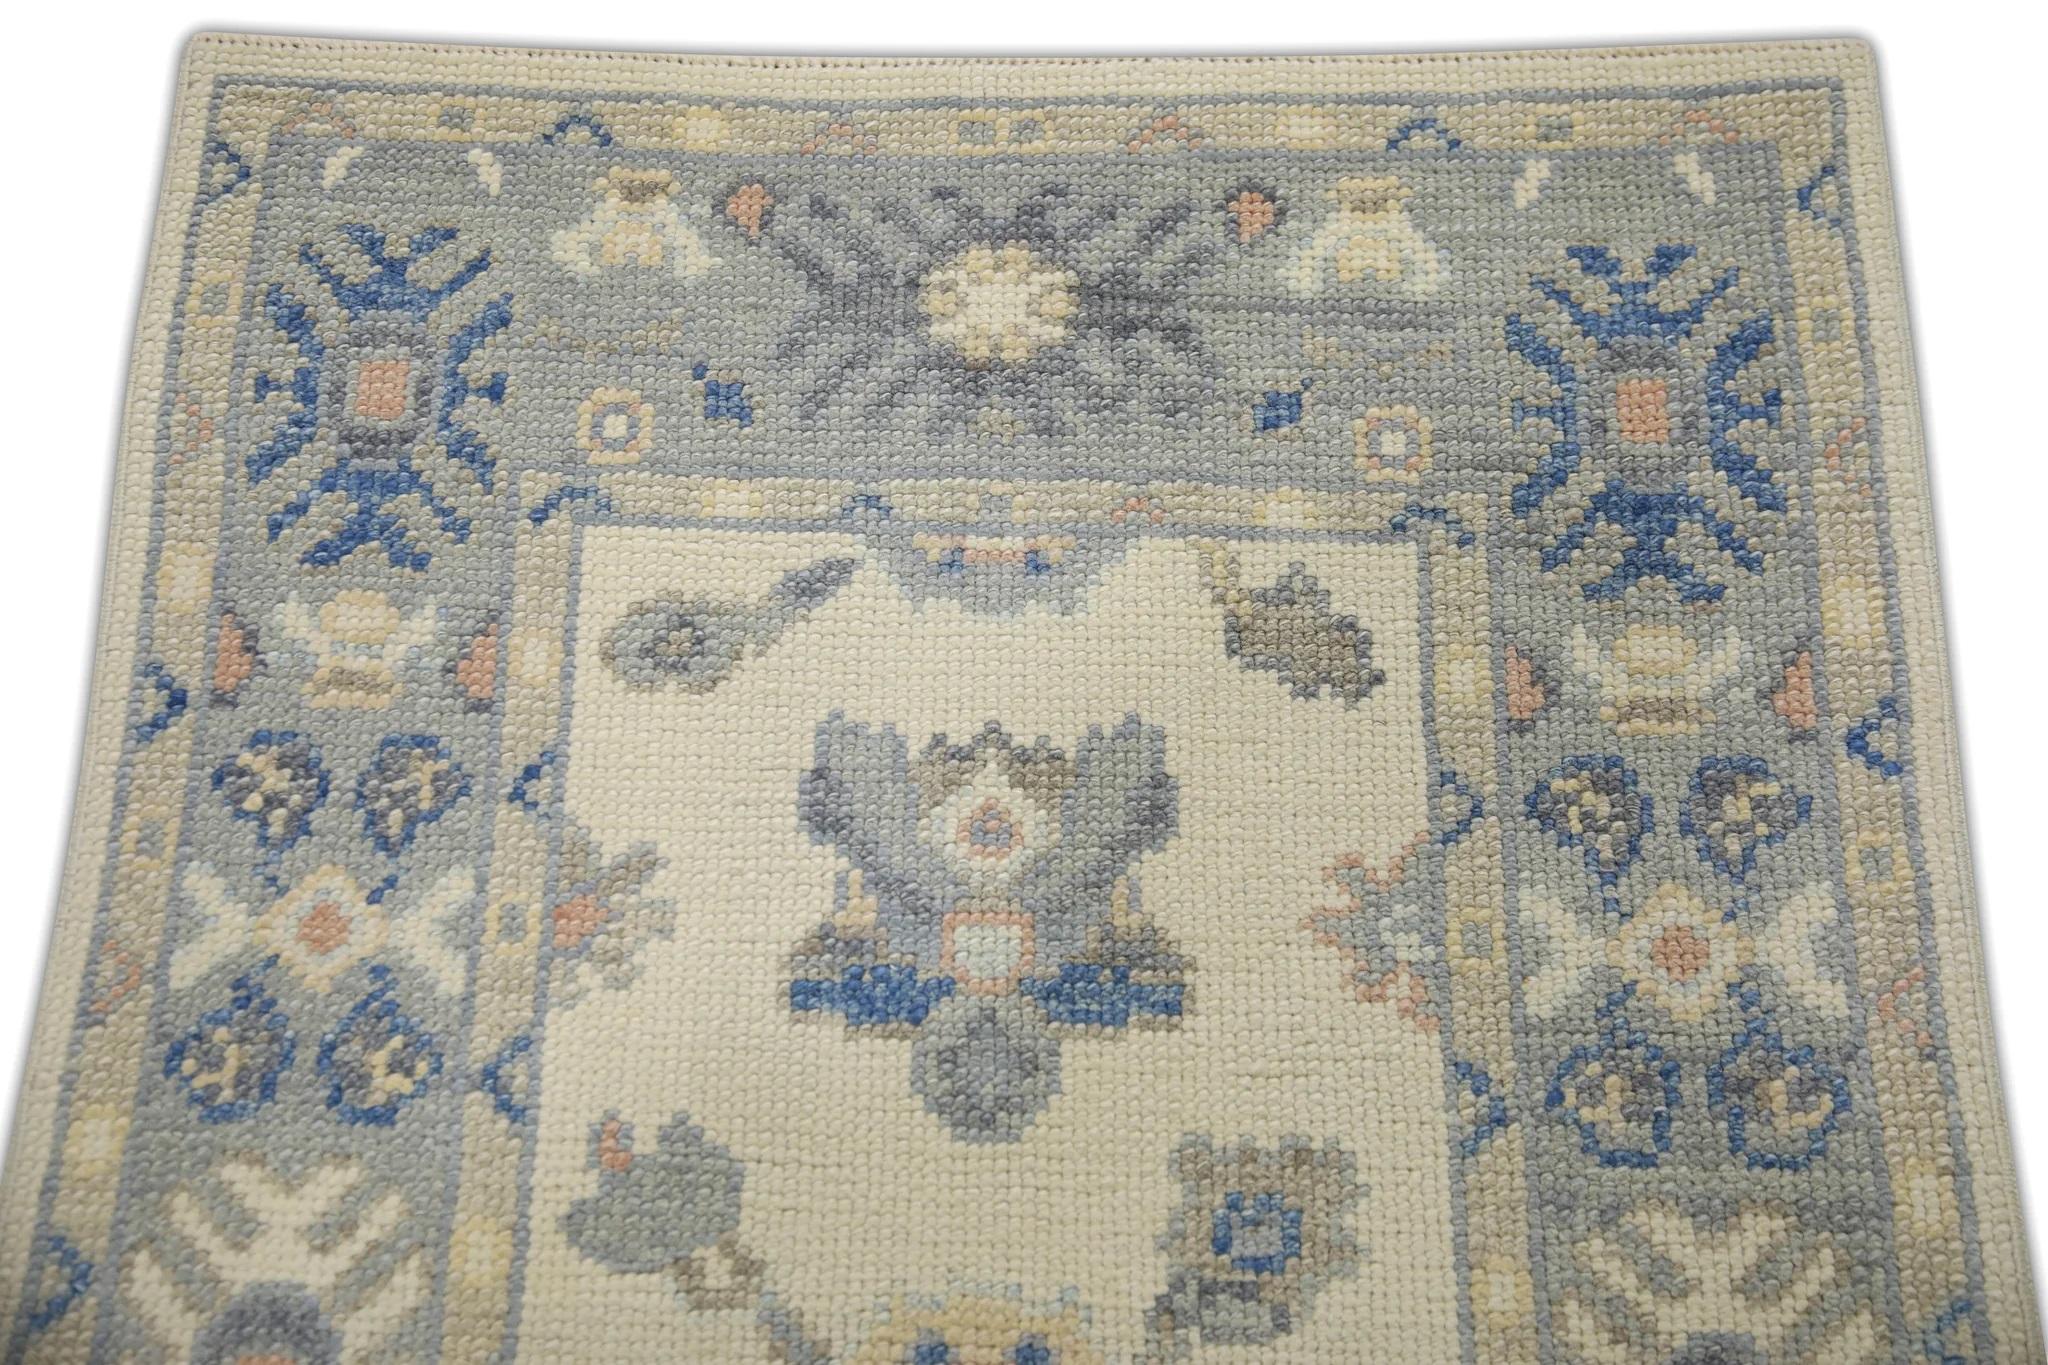 Cream Handwoven Wool Turkish Oushak Rug in Blue Floral Pattern 2'6